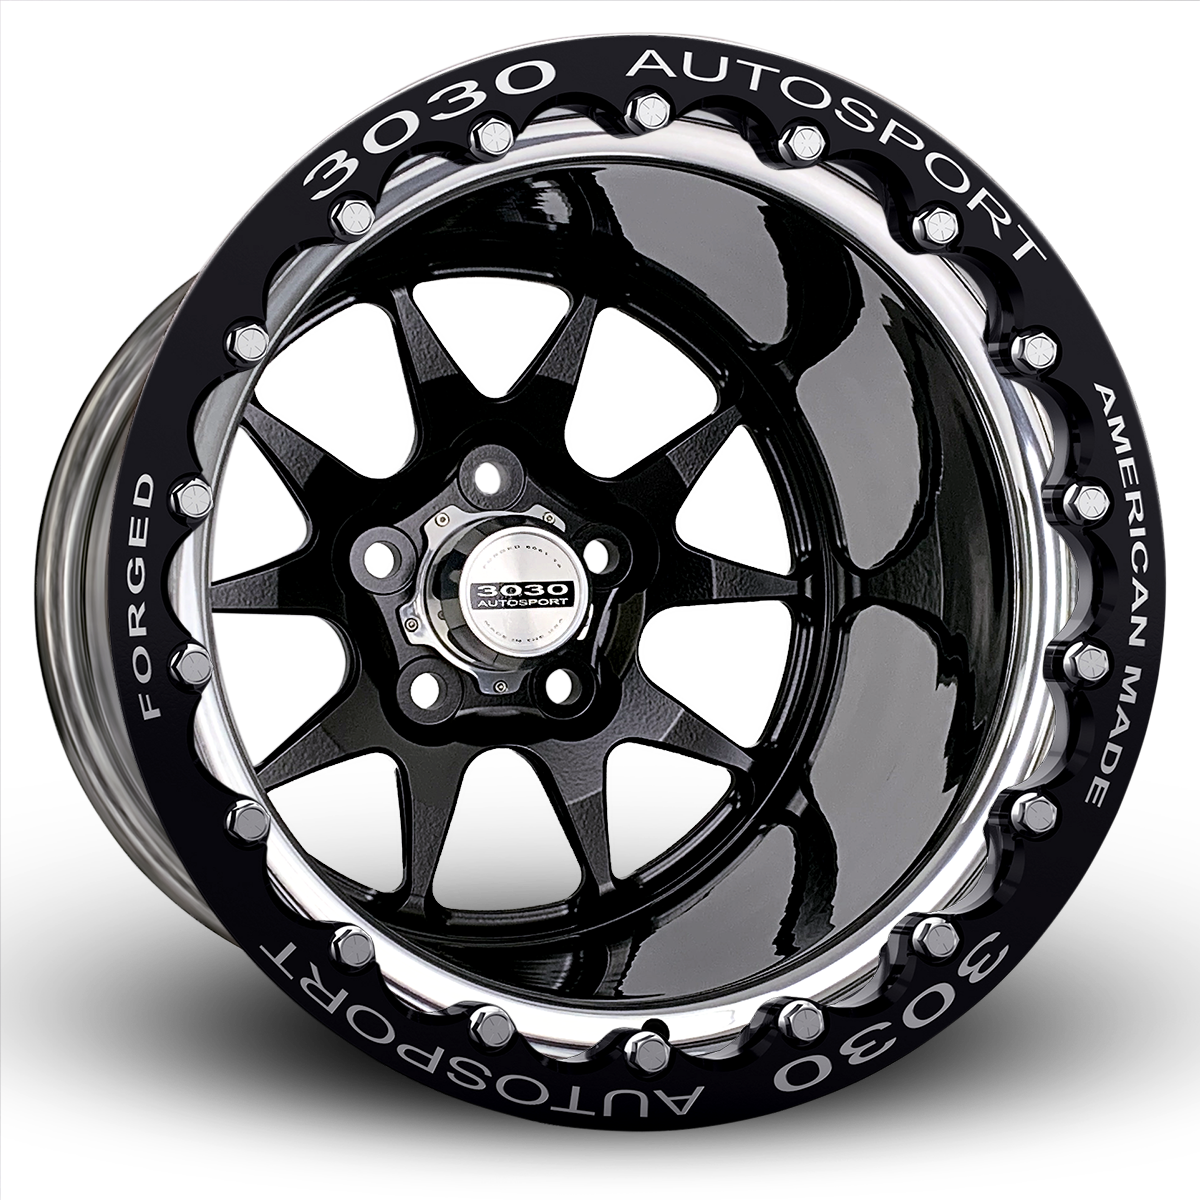 MACH-10 Double-Beadlock Wheel, Size: 15x12", Bolt Pattern: 5x5", Backspace: 6.500" [Black/Polished]